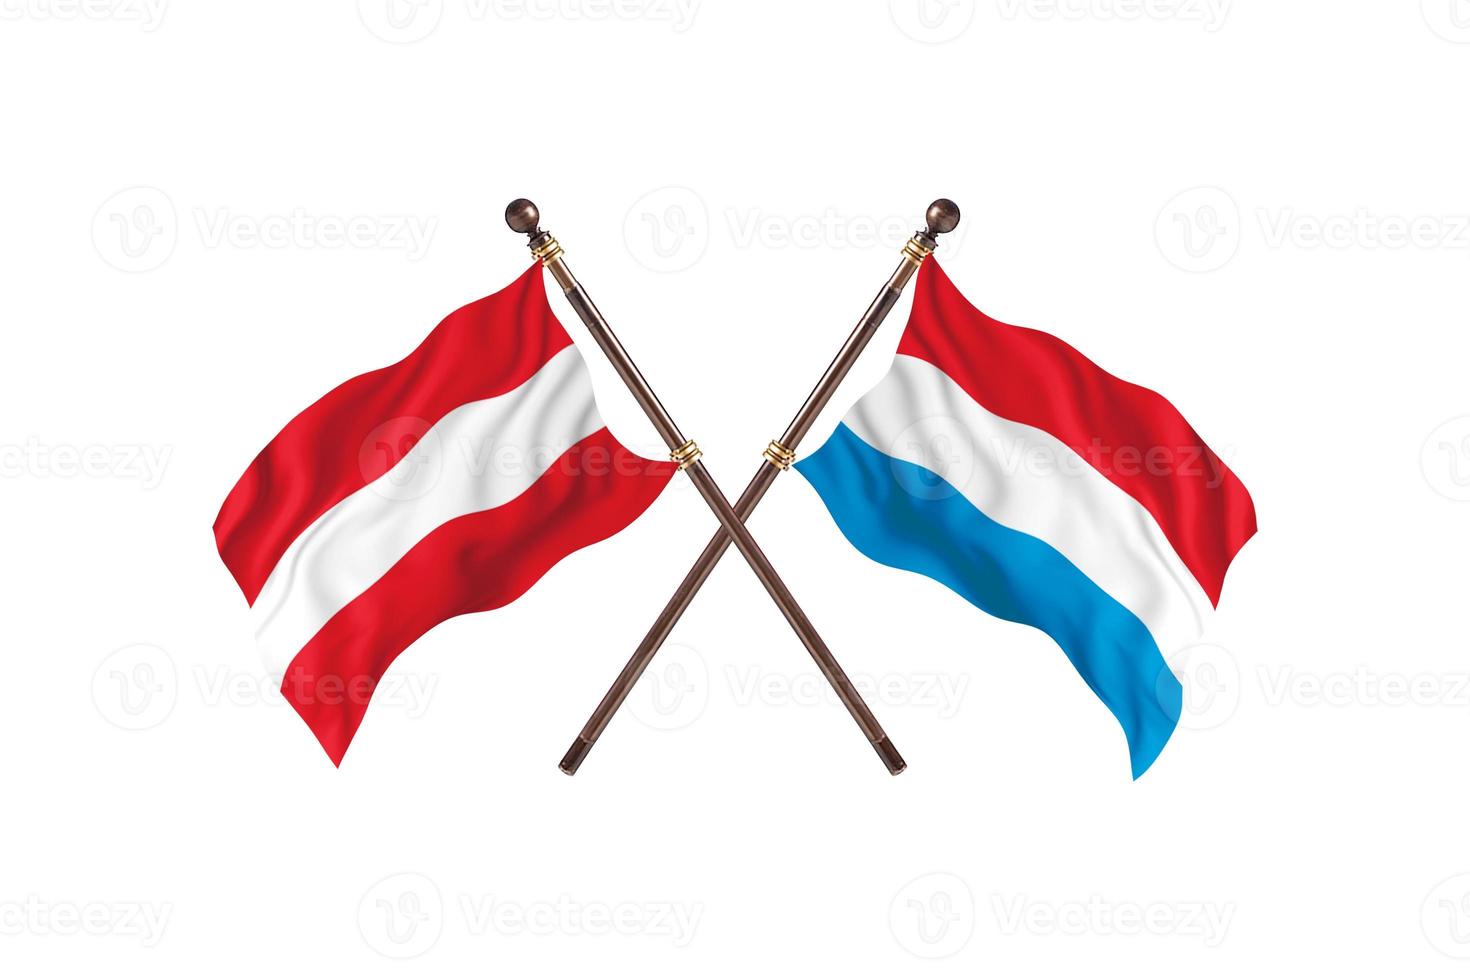 österrike mot luxemburg två Land flaggor foto